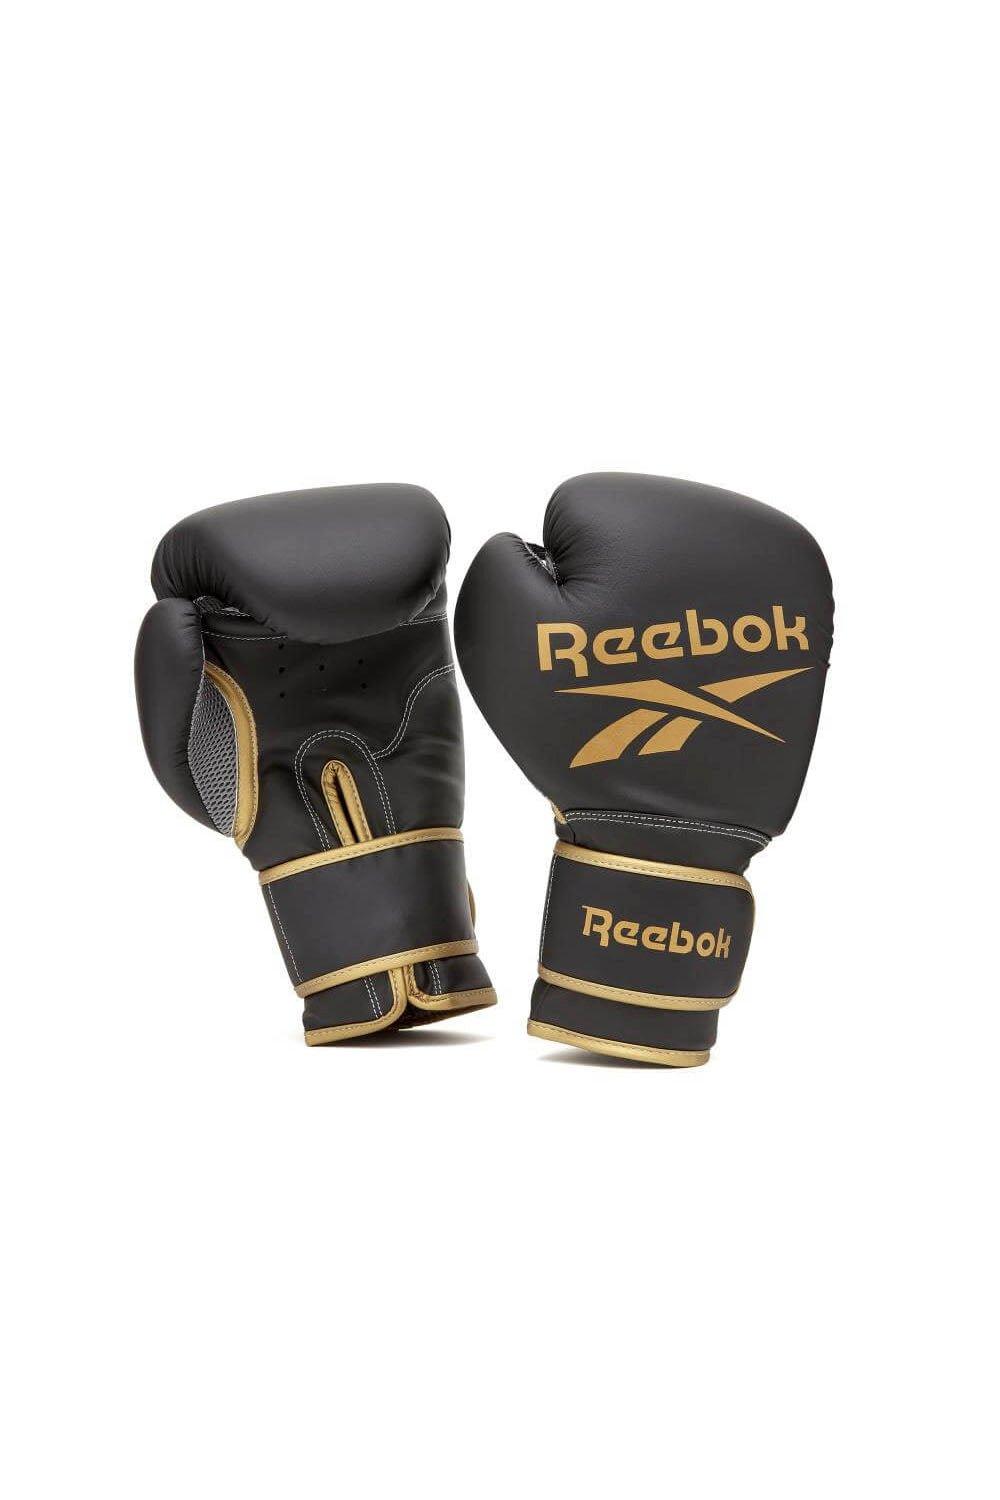 Reebok Boxing Gloves - Gold/Black|Size: 10oz|black